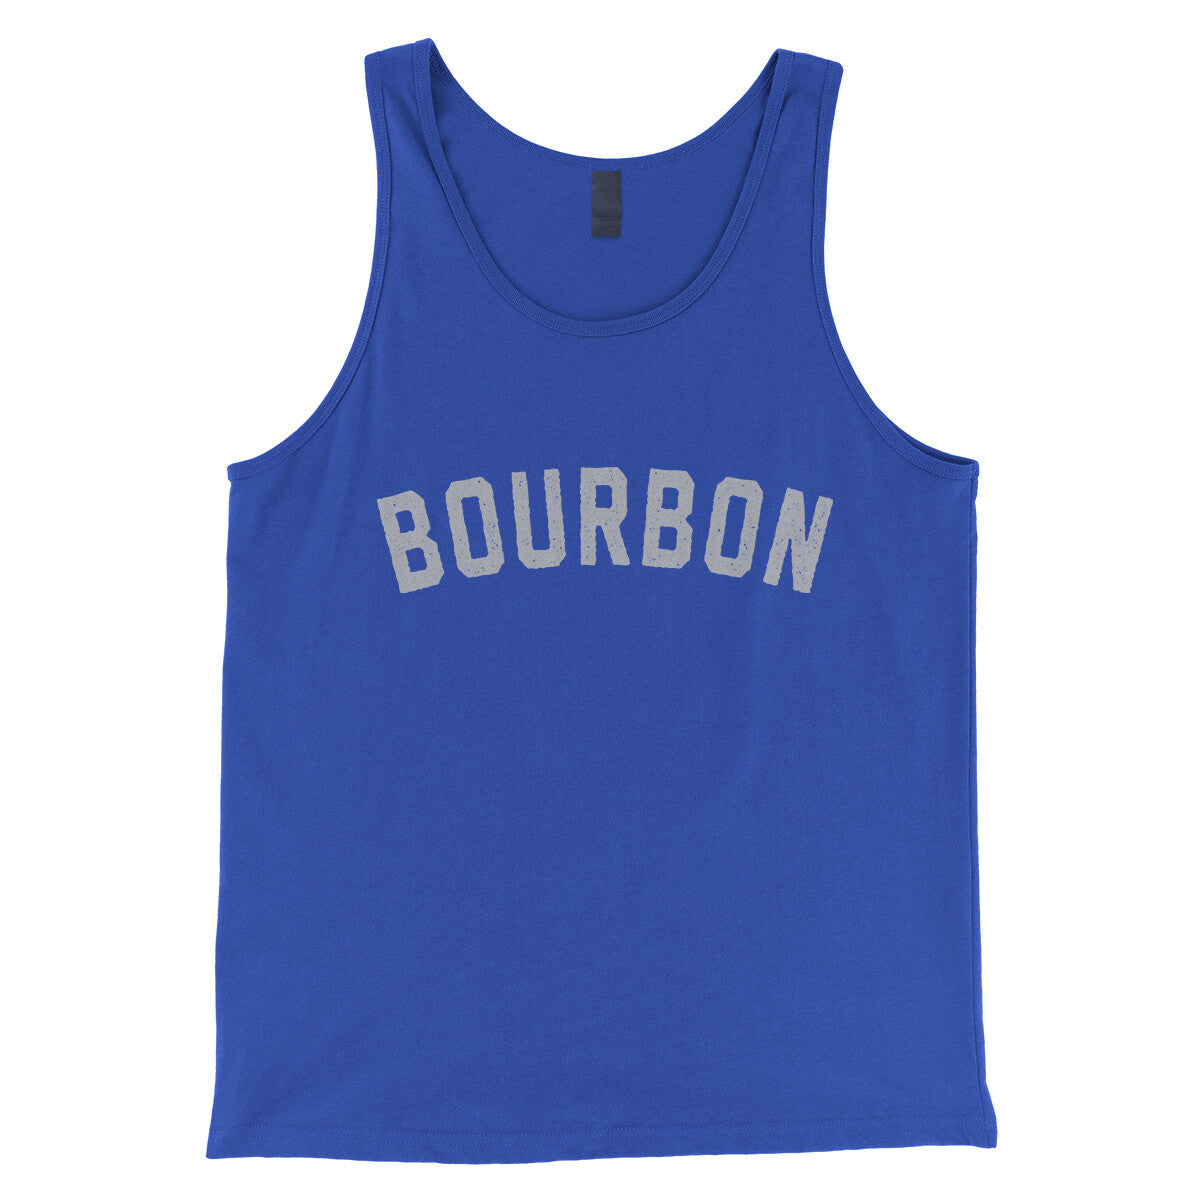 Bourbon in True Royal Color